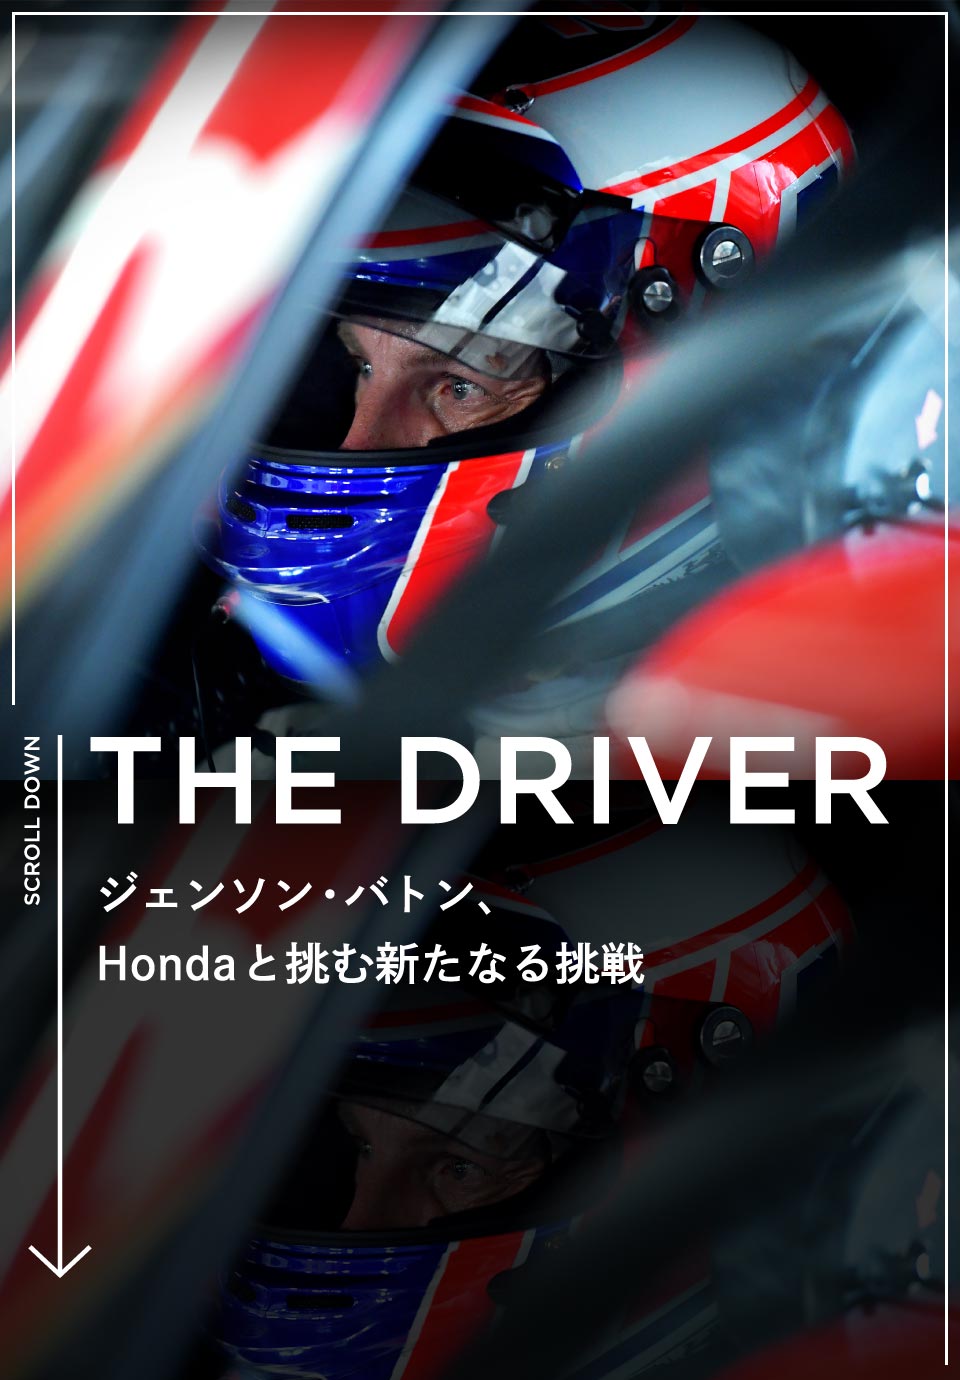 THE DRIVER - HondaƒސVȂ钧 -